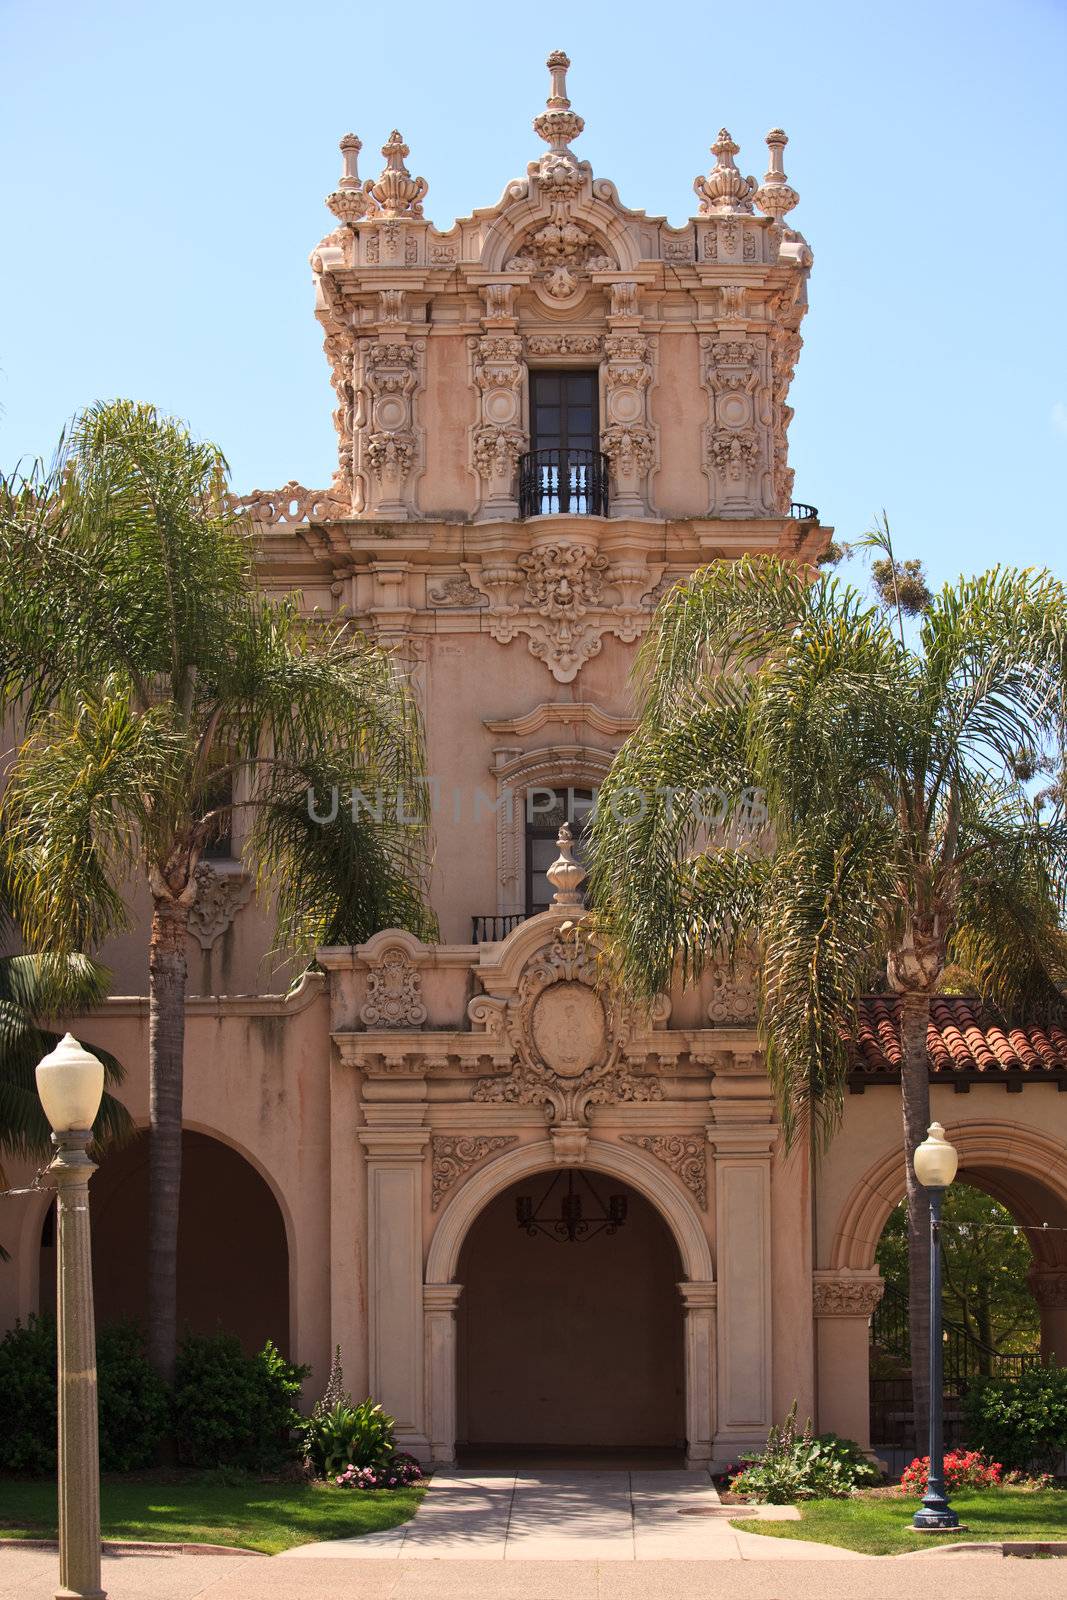 Casa de Balboa Detail by steheap